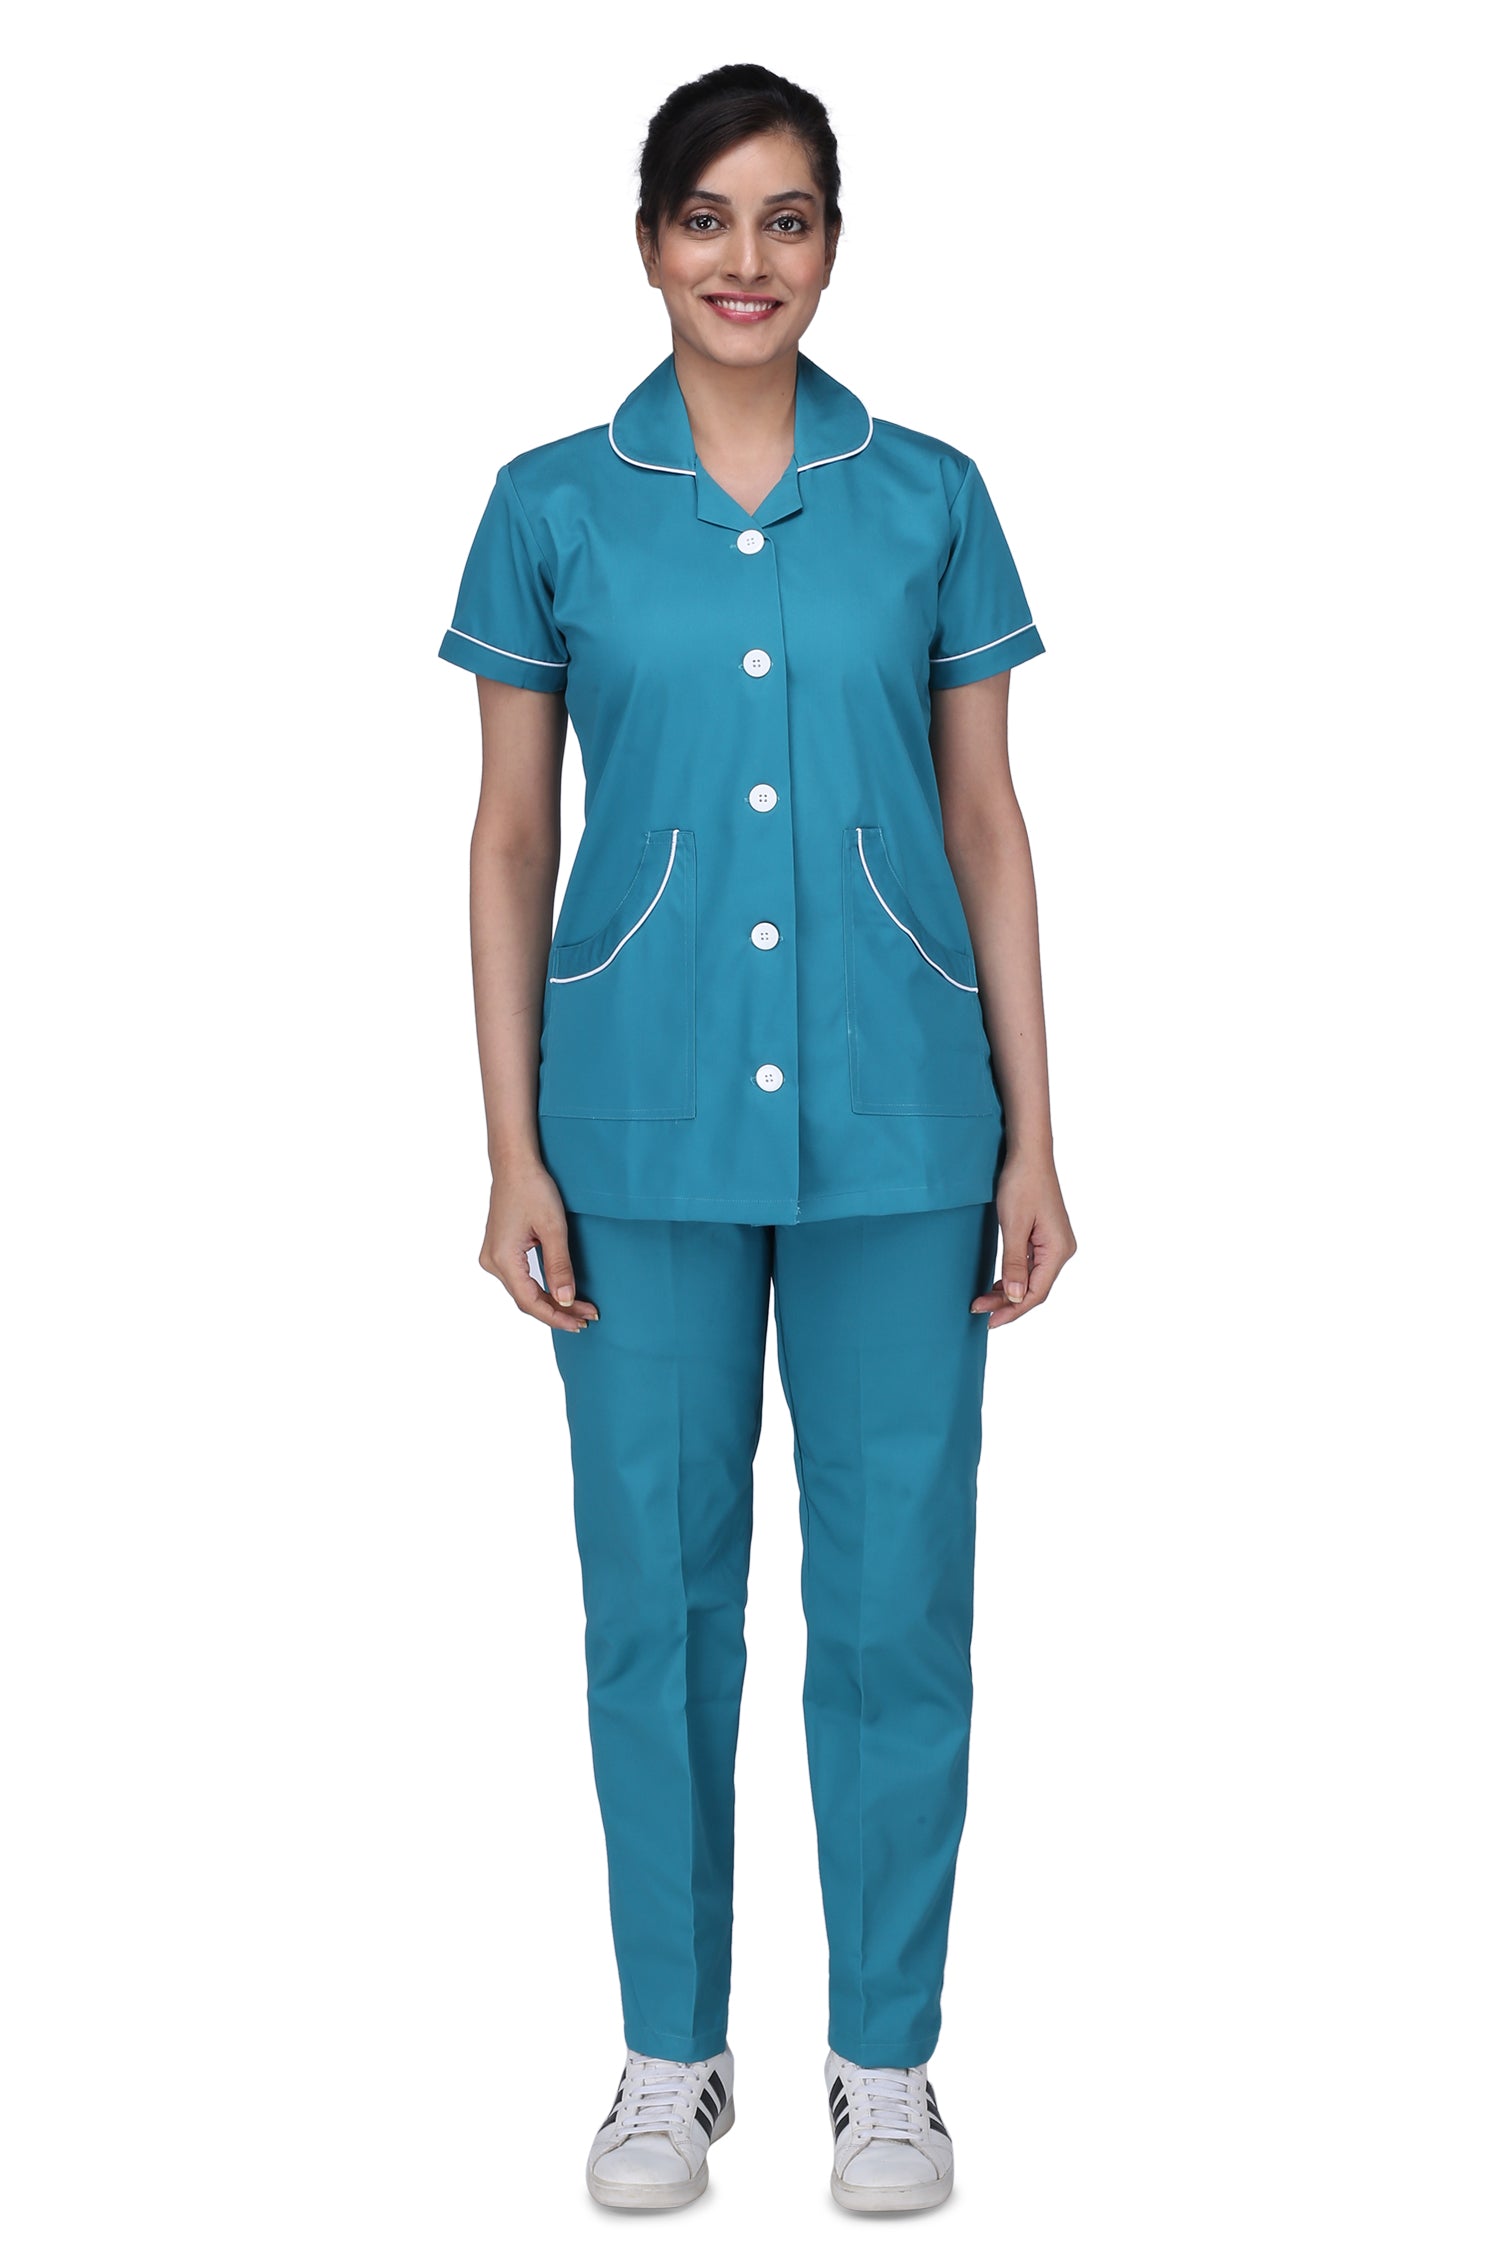 Nurse Uniforms Uniform Sarees Corp India's Most Trusted Brand For Uniforms